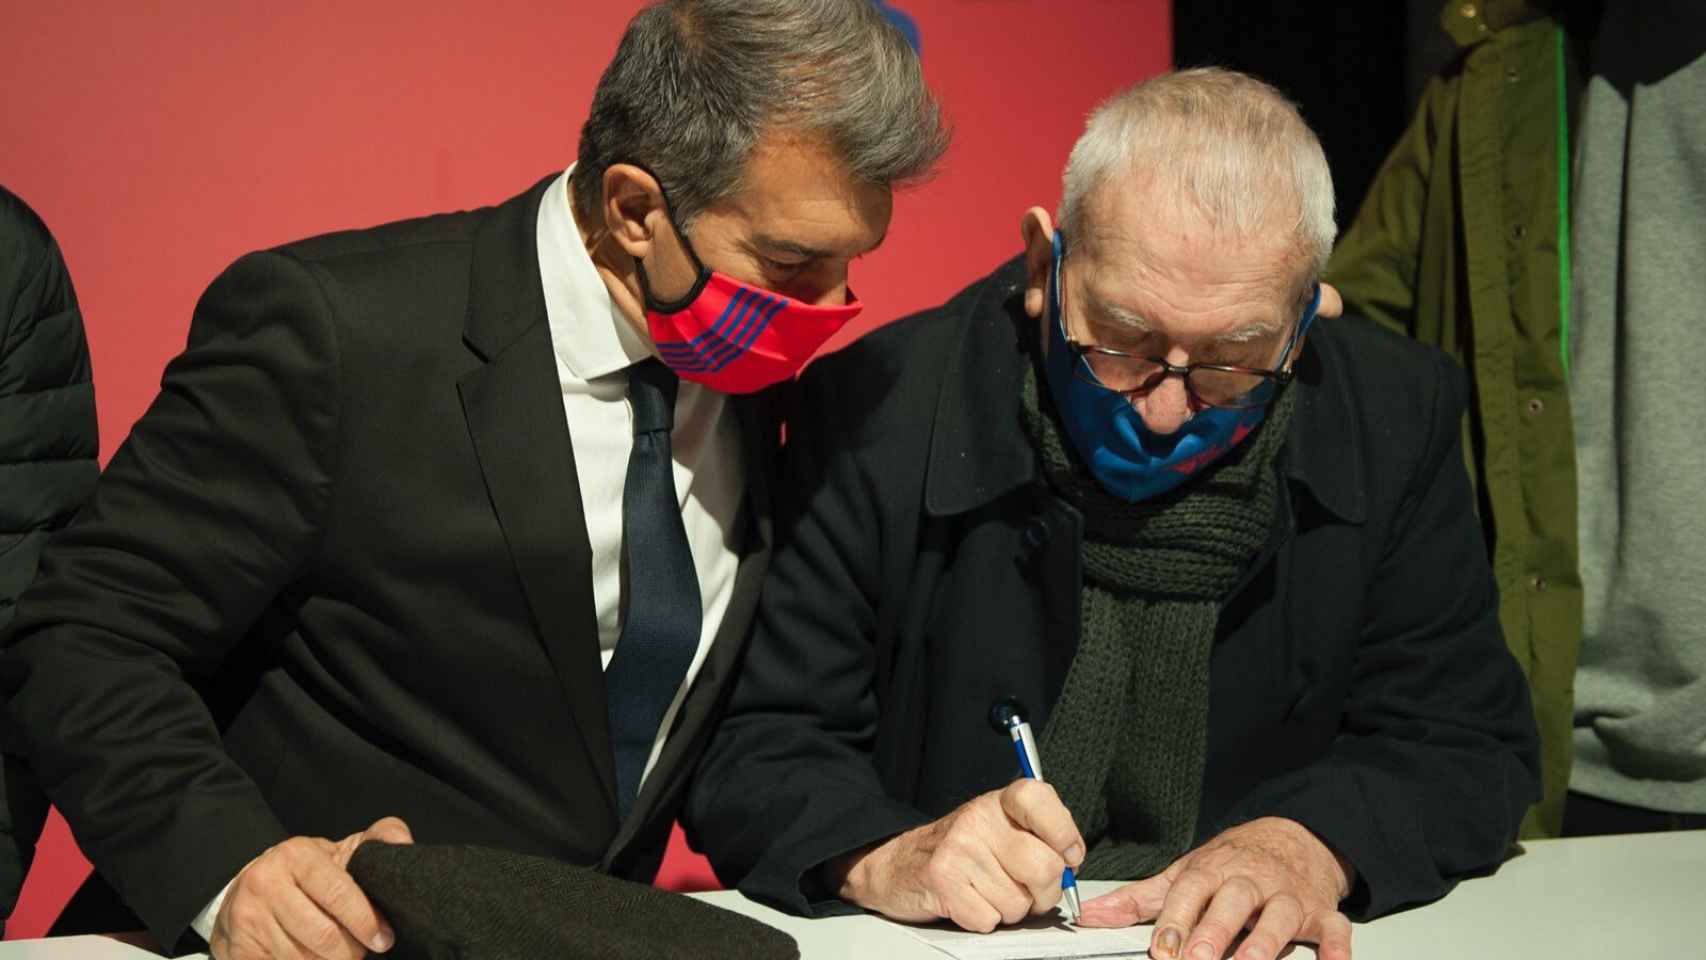 Joan Laporta supervisa como un socio del Barça le da su firma para las elecciones a la presidencia. Foto: Twitter (@estimemelbarça)